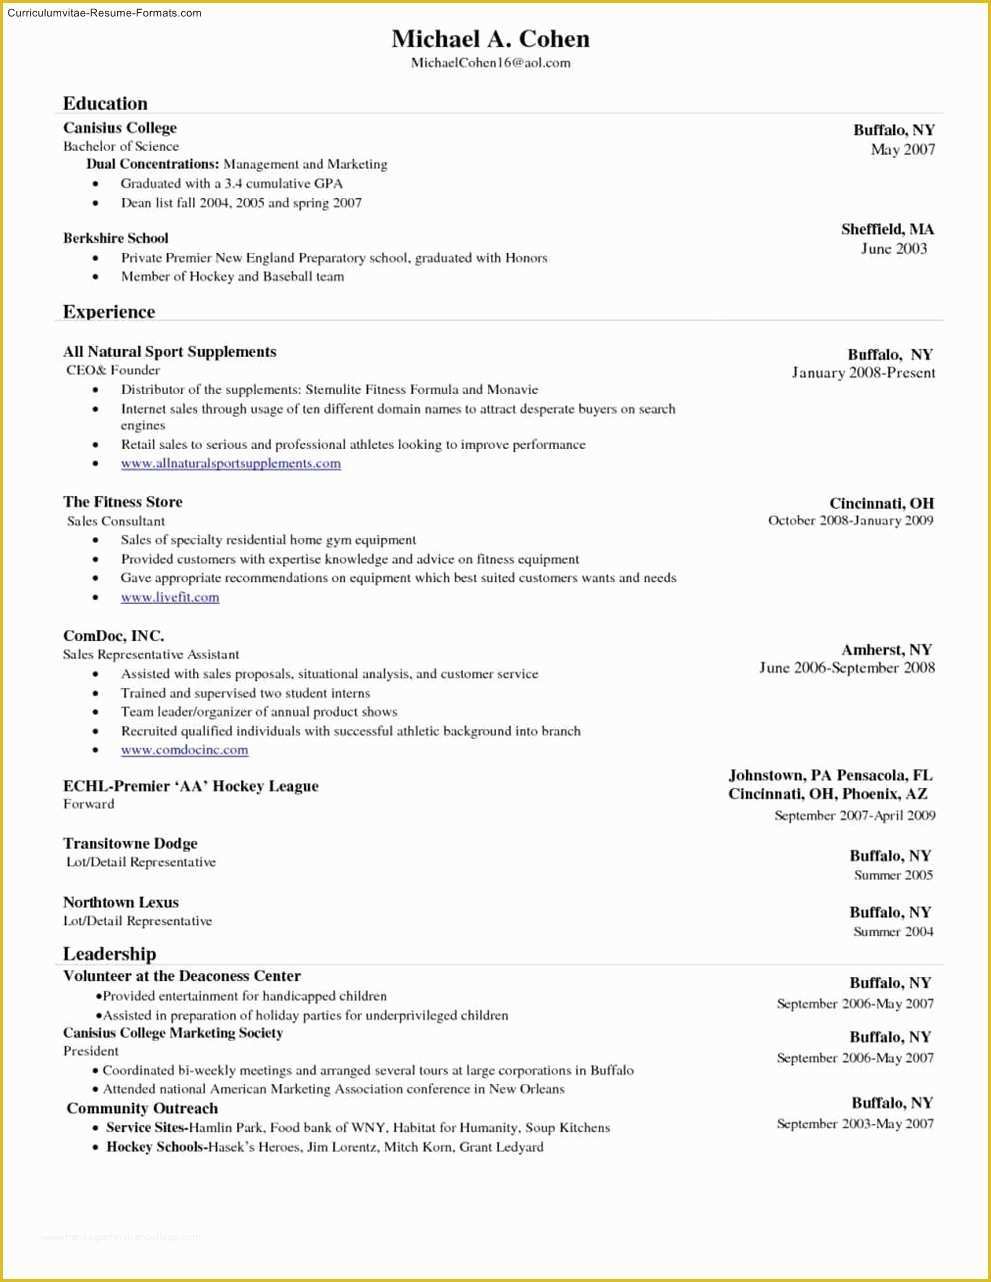 Free Resume Wizard Templates Of Microsoft Templates Resume Wizard Free Samples